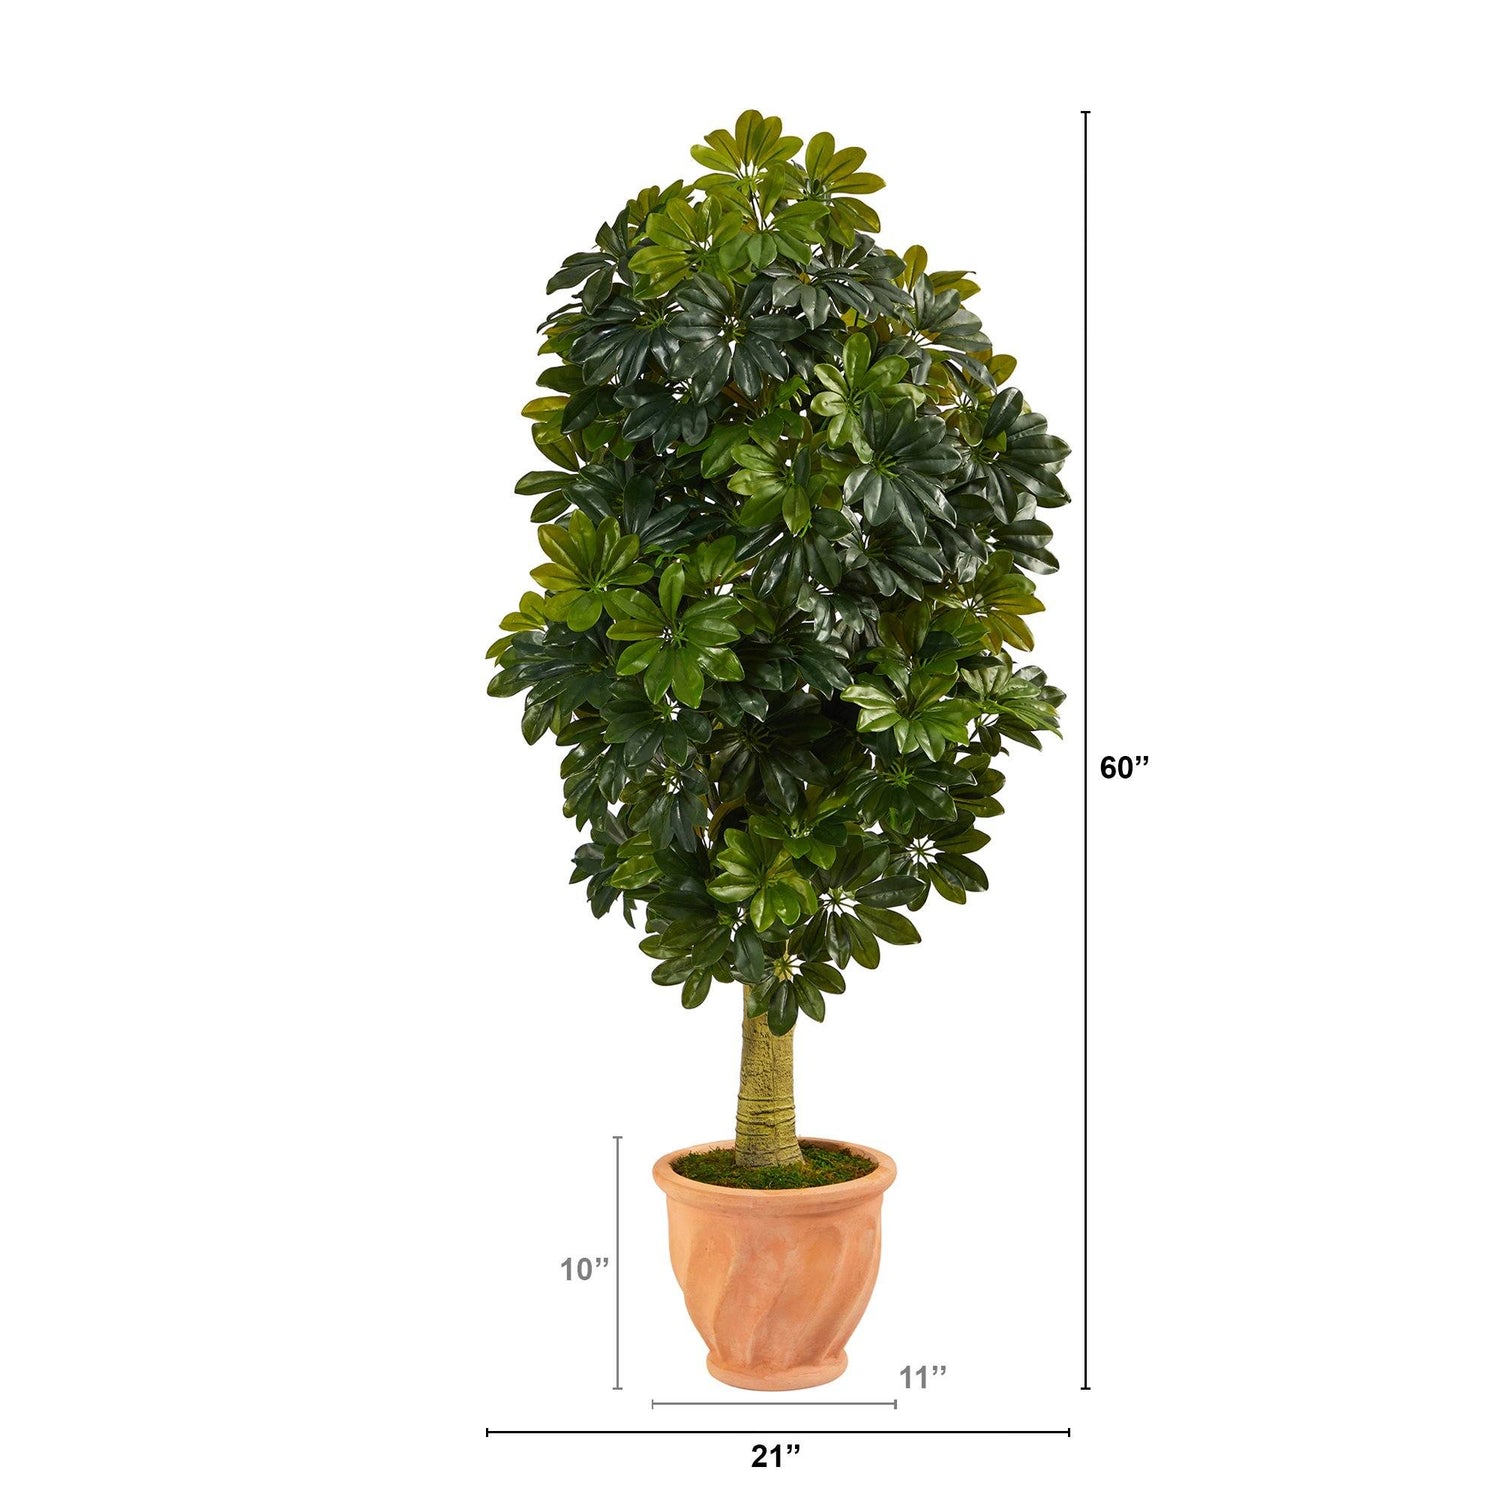 5' Schefflera Artificial Tree in Terra-Cotta Planter (Real Touch)